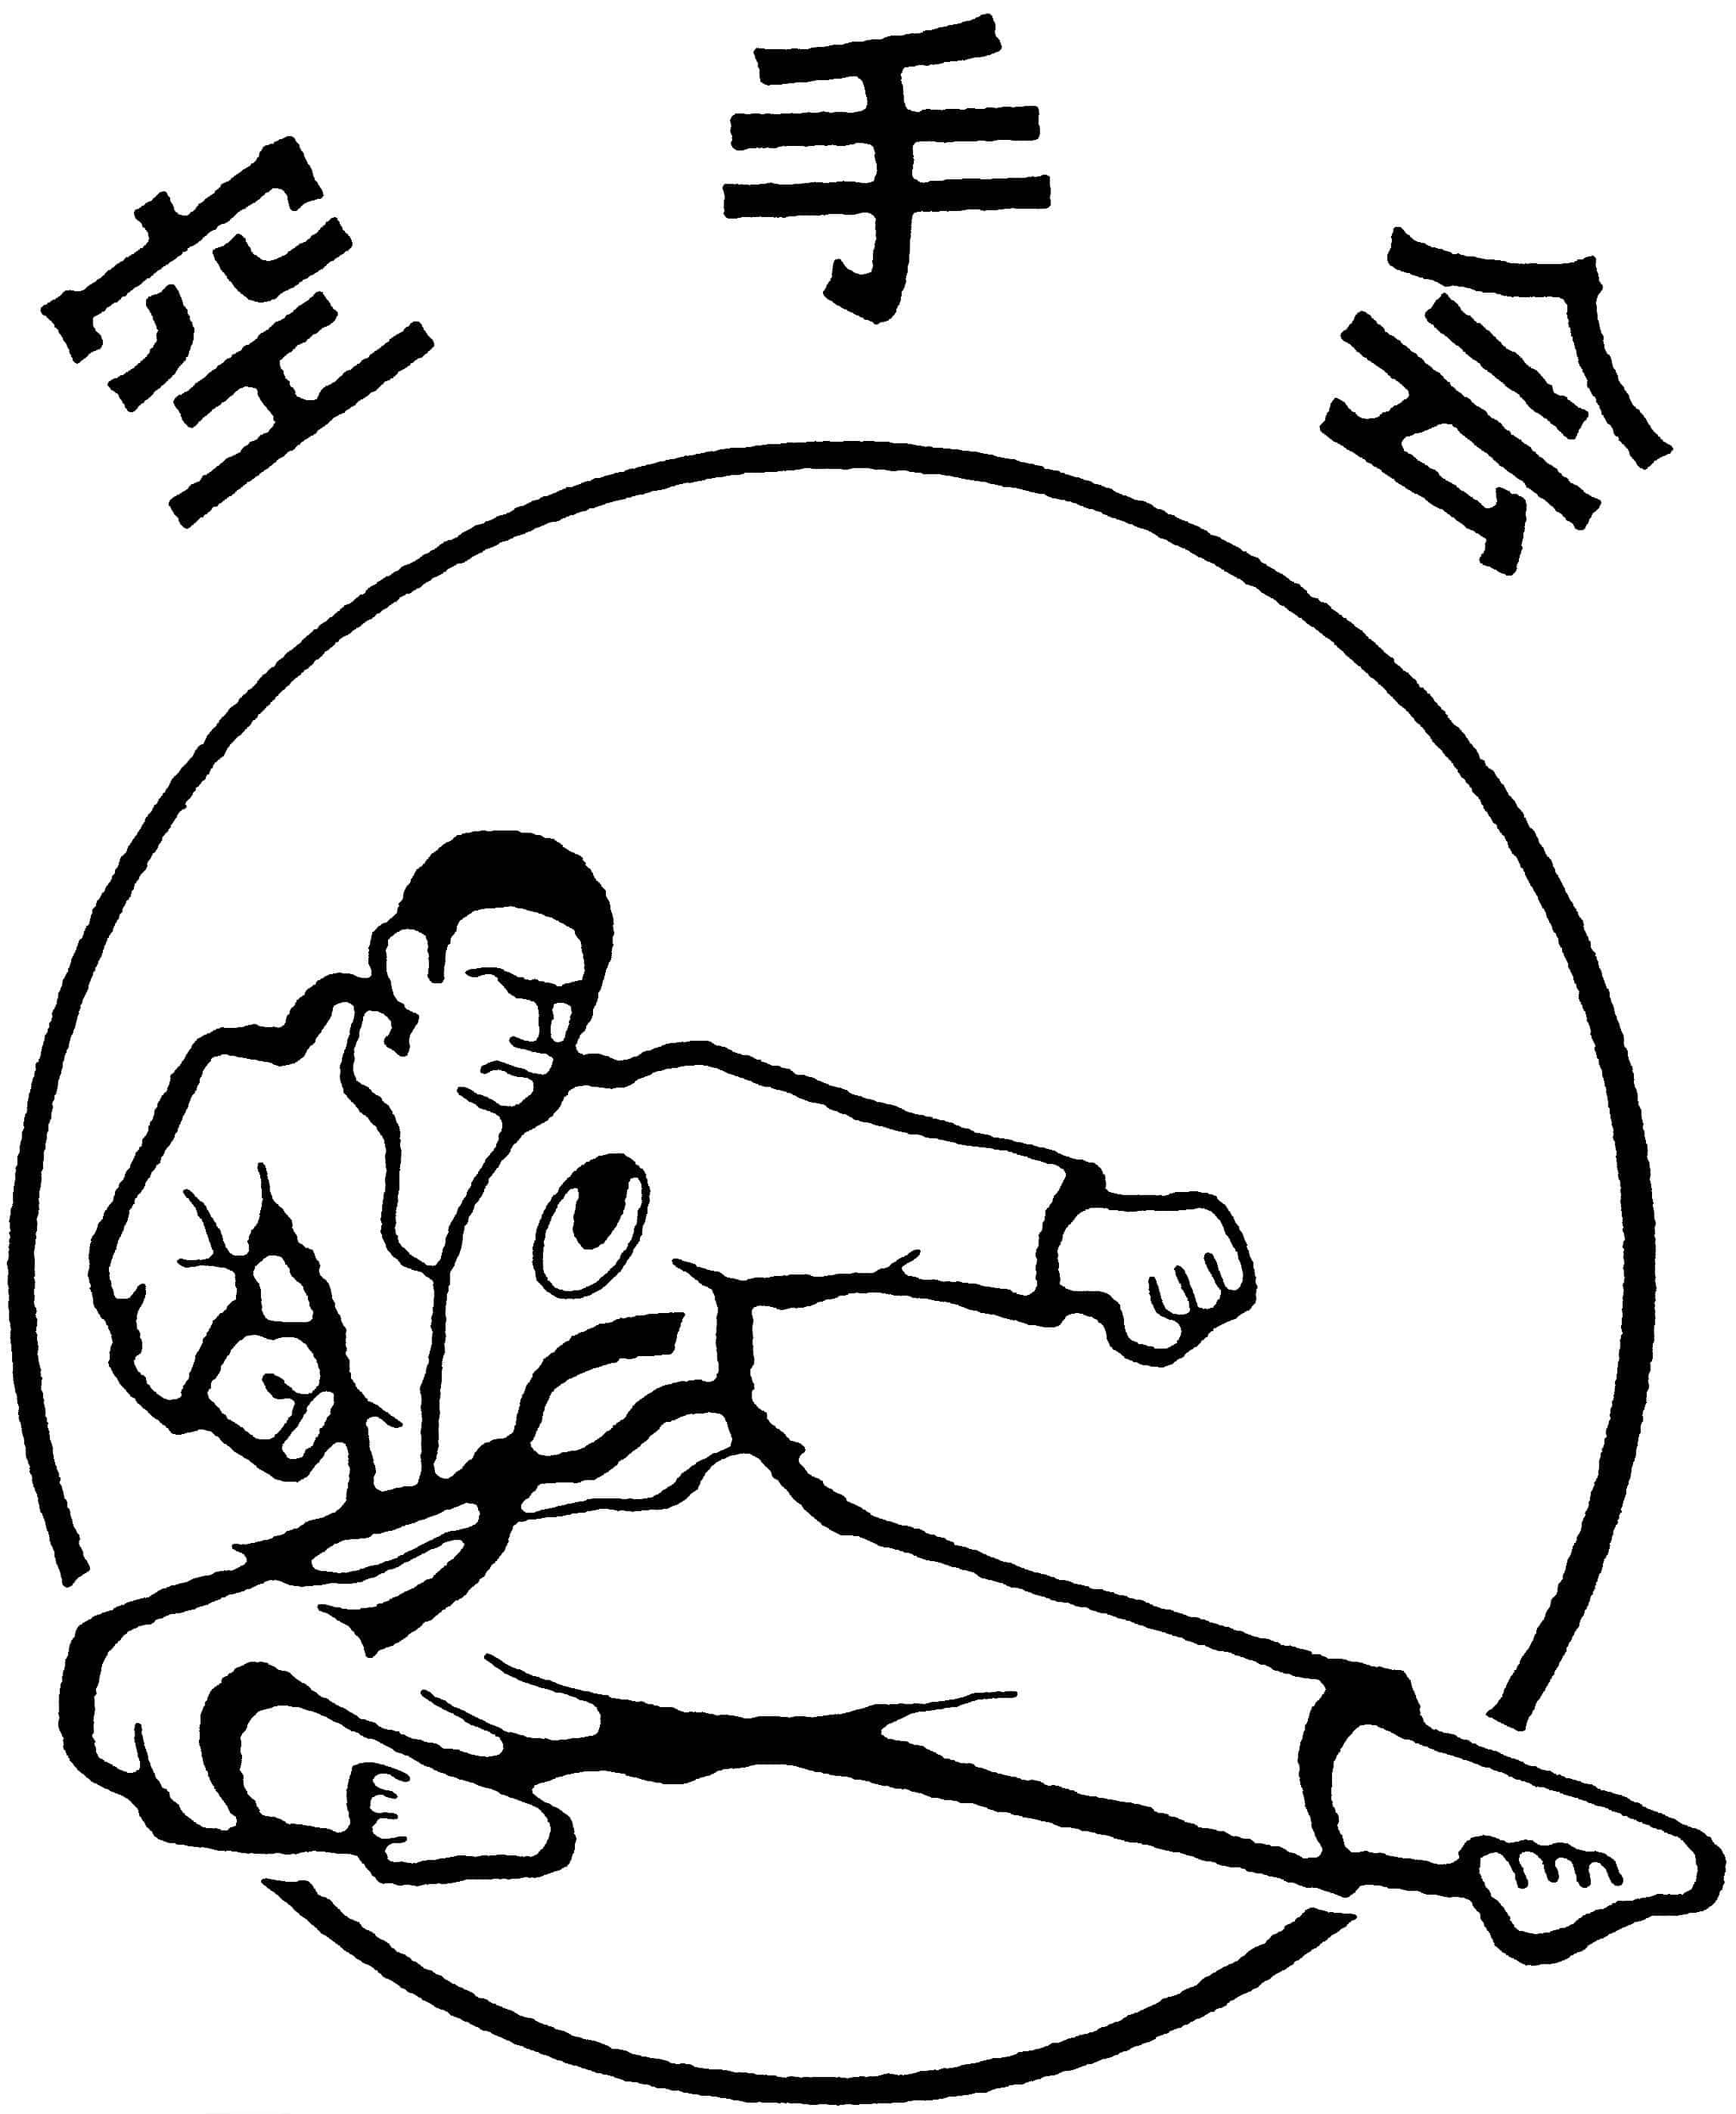 Karatekai Basel - Generalversammlung abgesagt